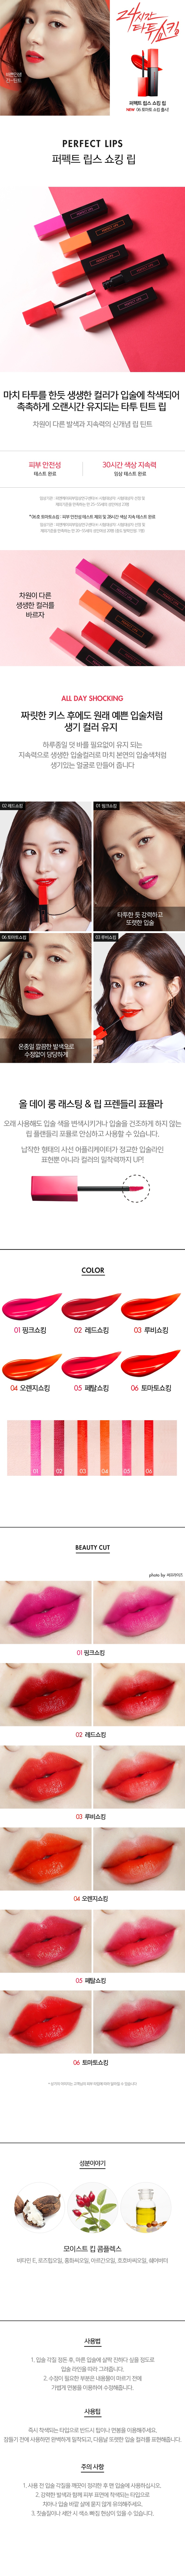 Tony Moly Perfect Lips Shocking Lip korean cosmetic makeup product online shop malaysia usa macau1